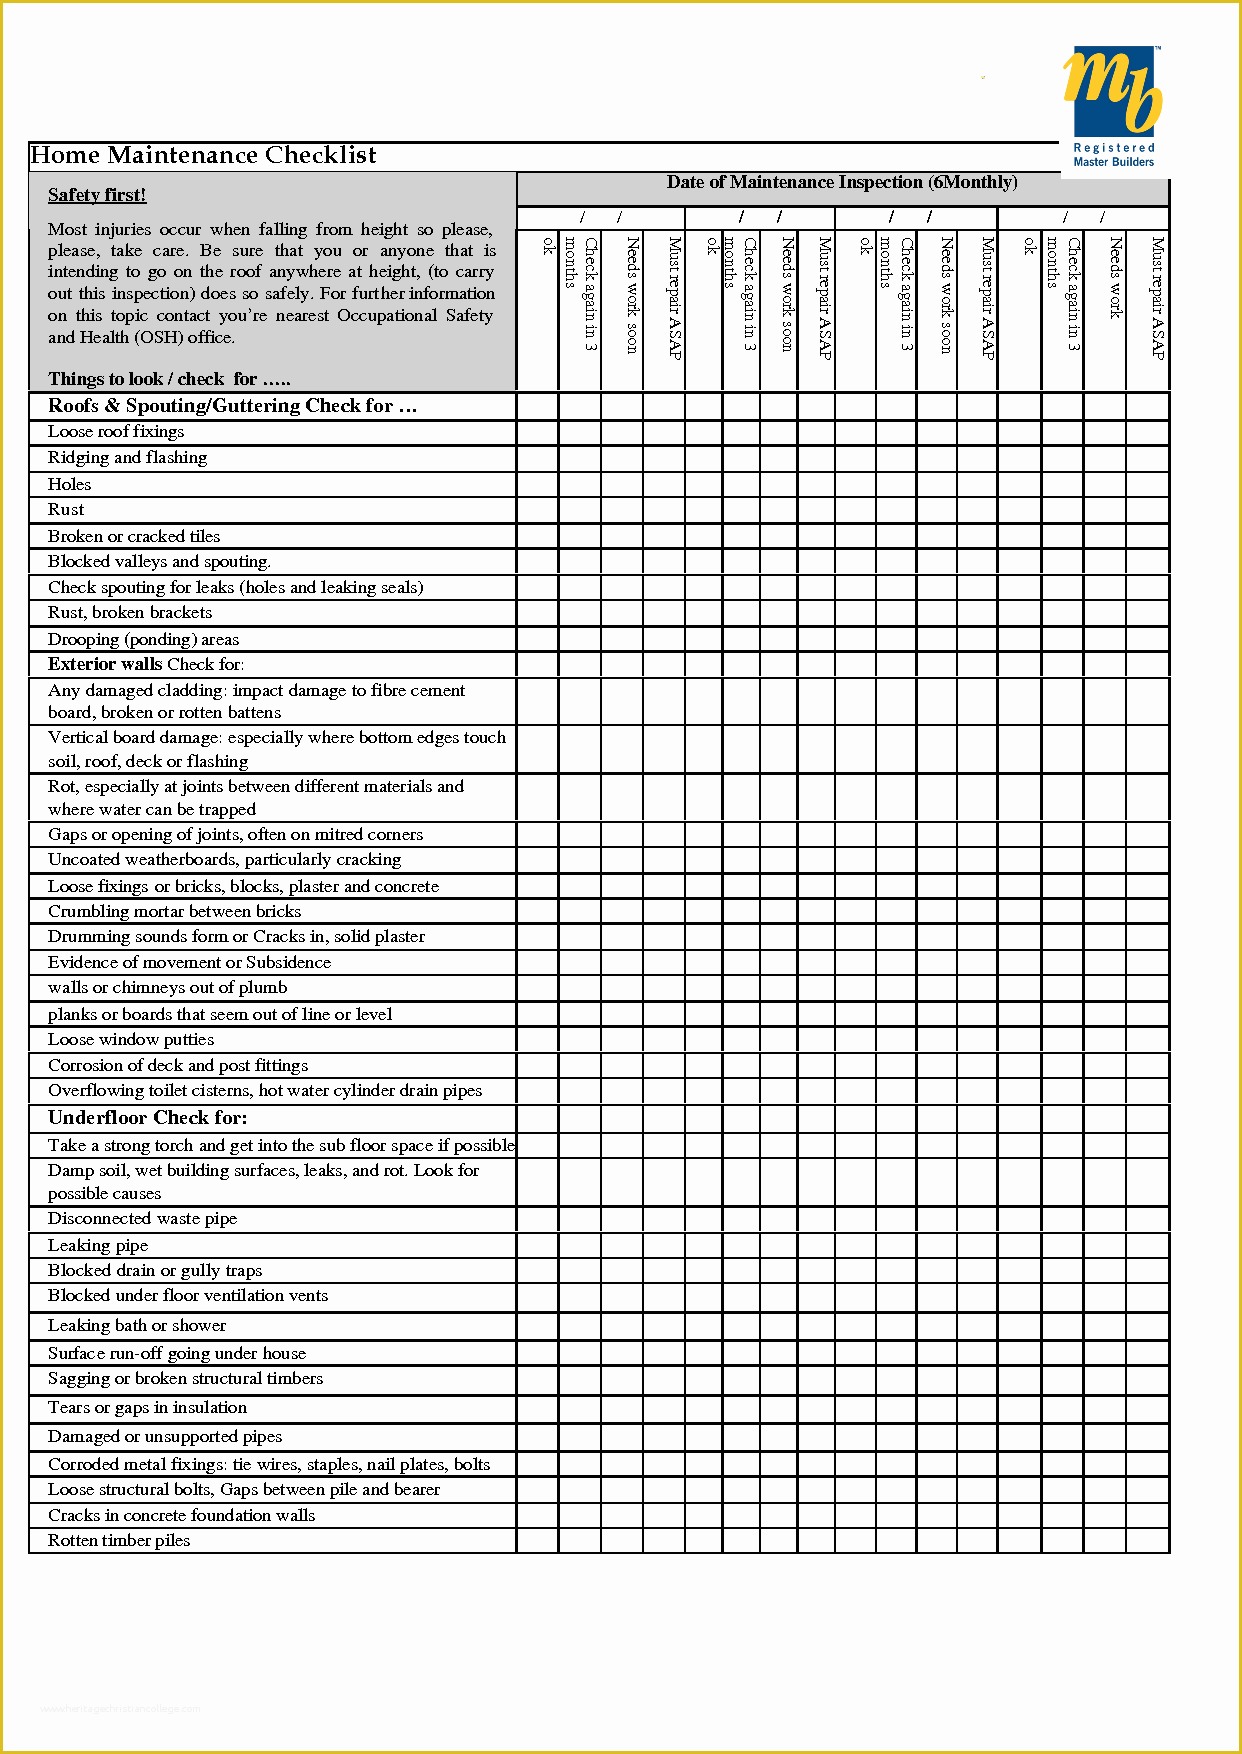 Free Property Management Maintenance Checklist Template Of Home Maintenance Checklist Printable